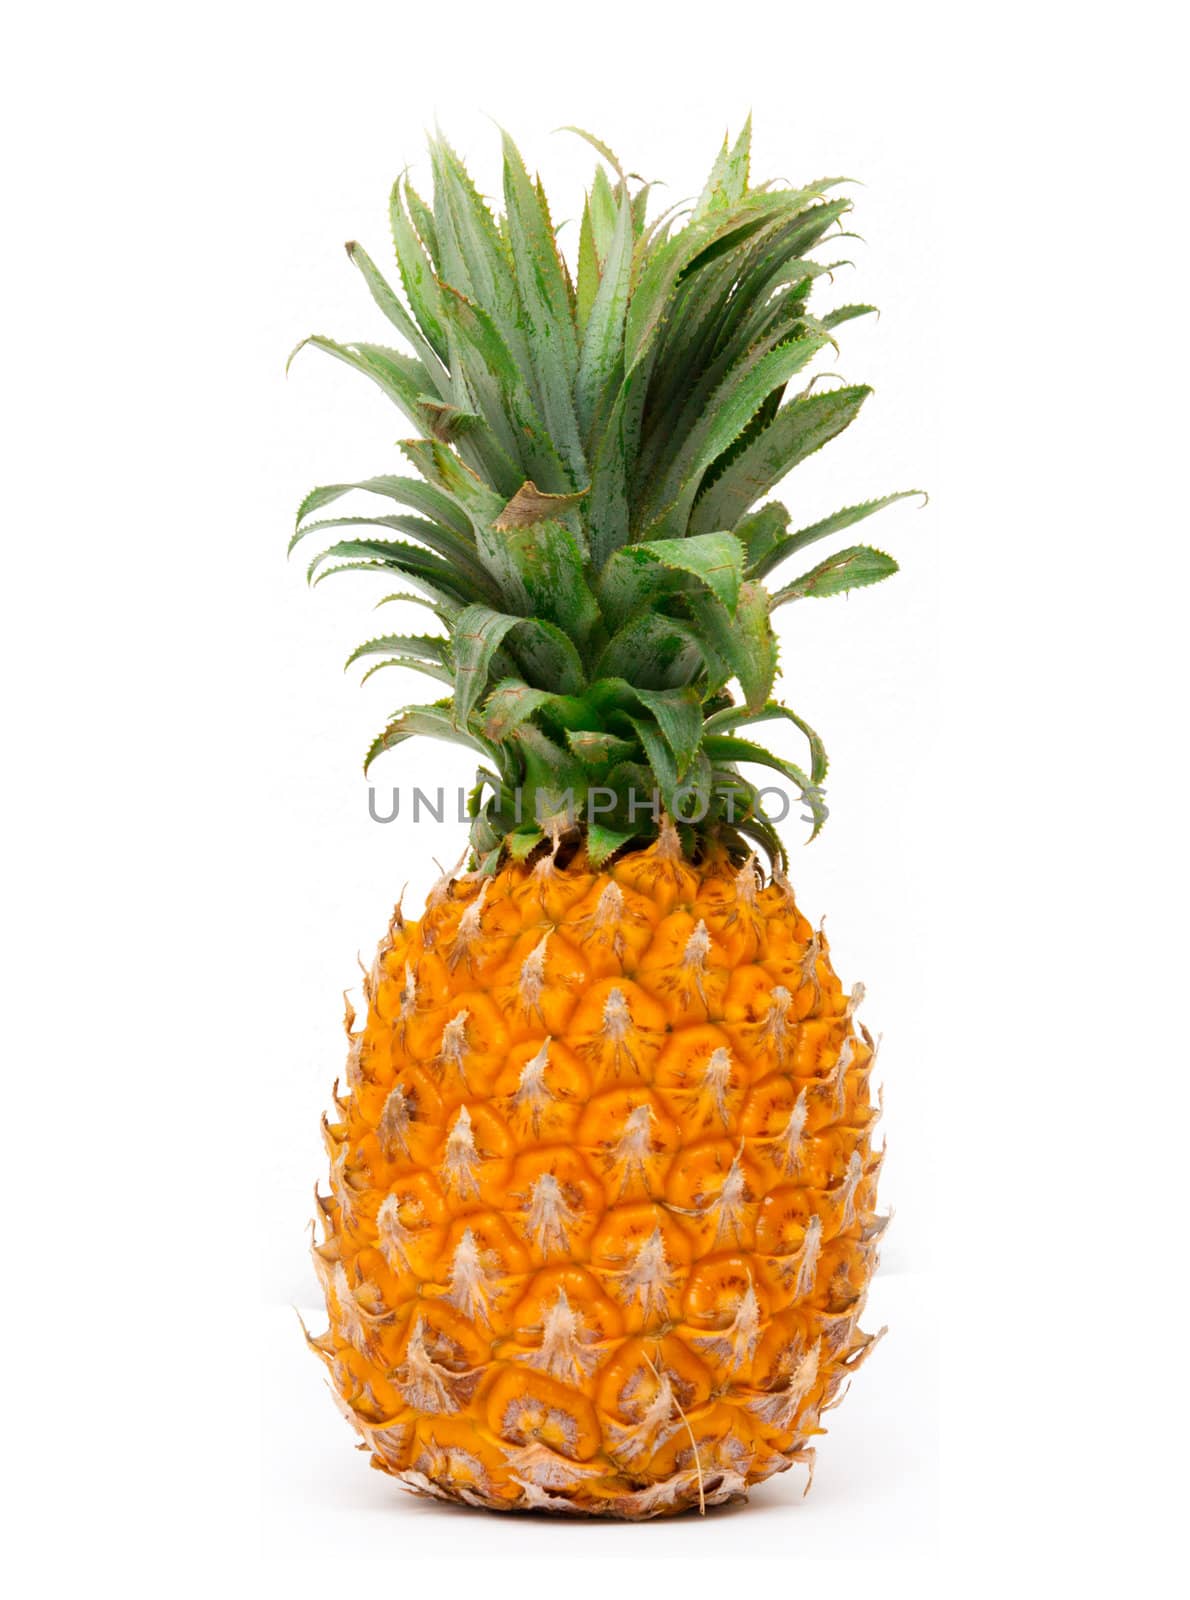 pineapple on white background by schankz